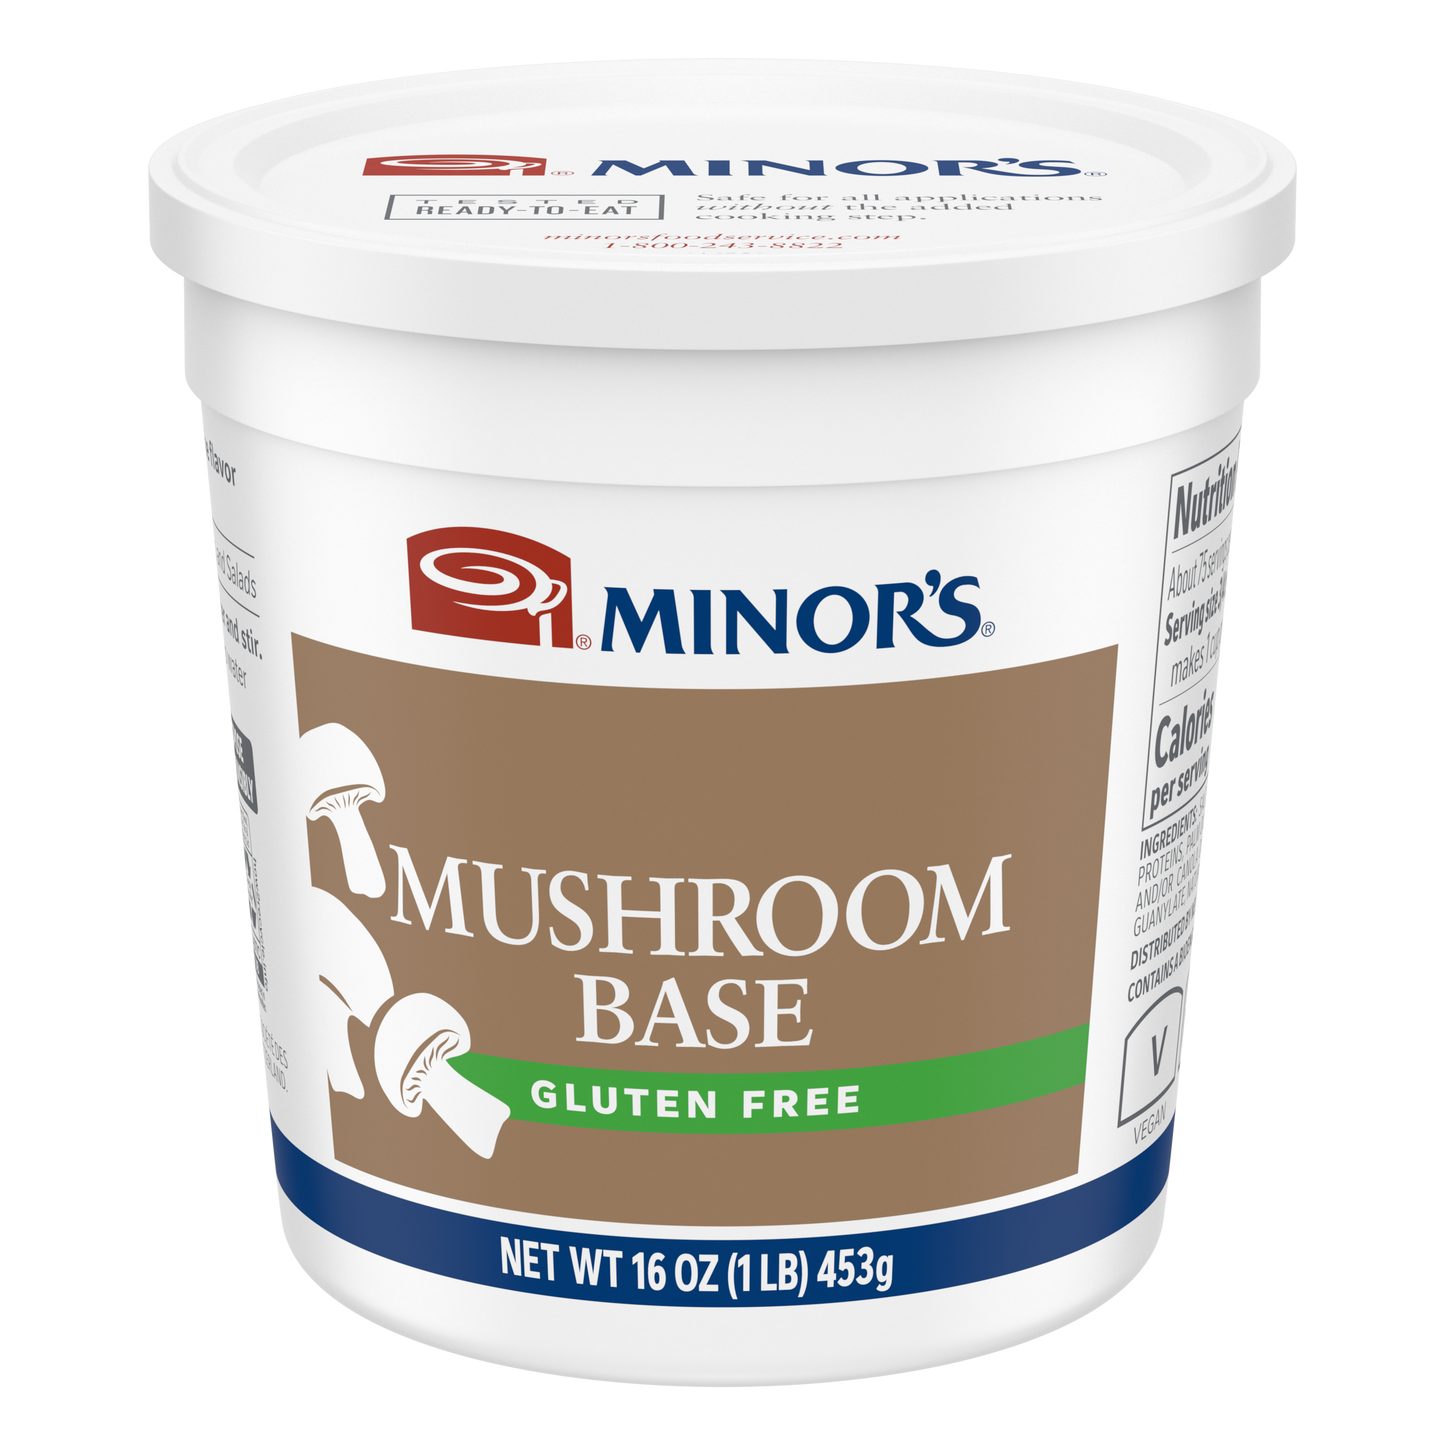 Minor's Mushroom Base (gluten free) - 16 oz